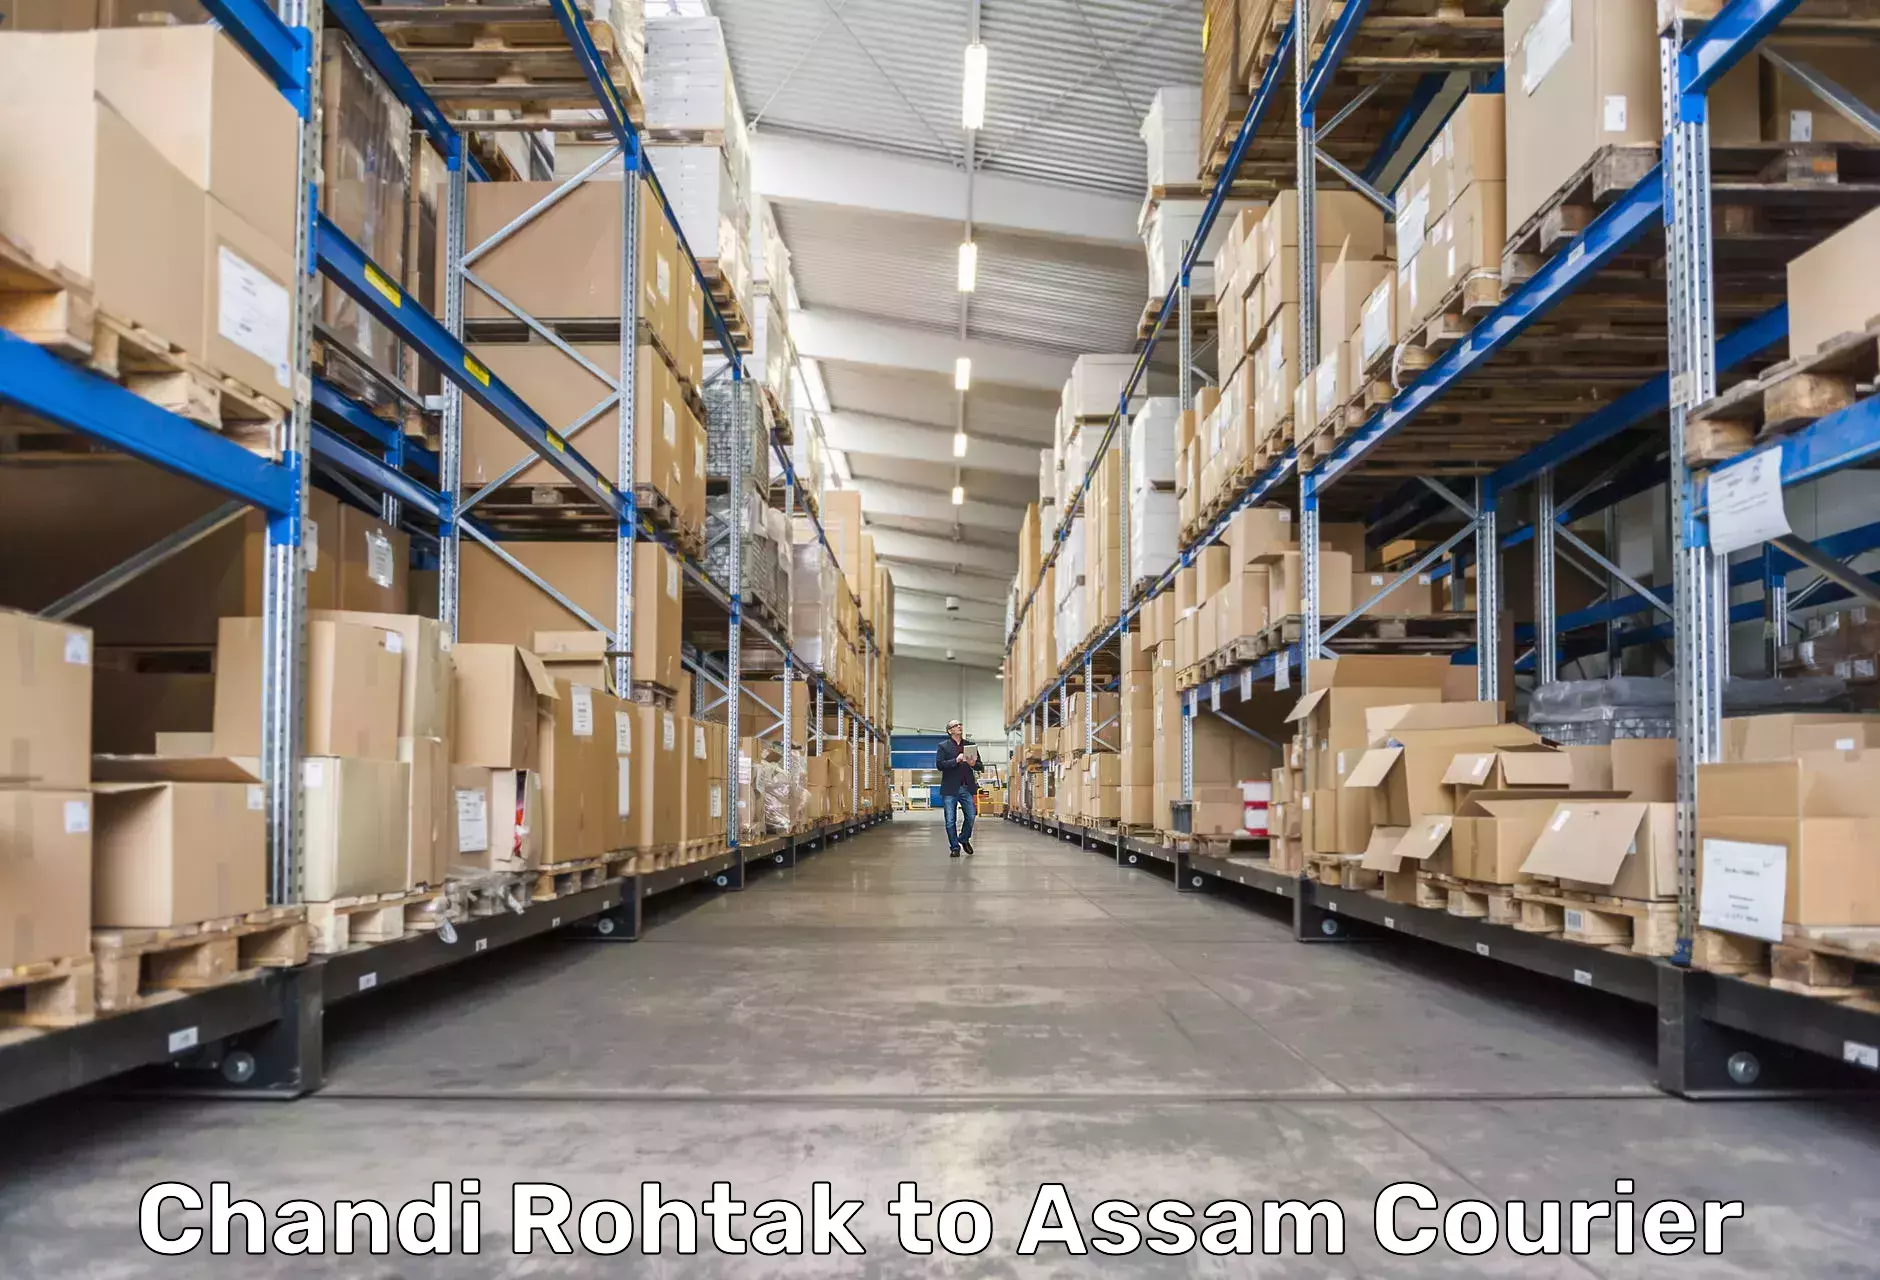 Courier service comparison in Chandi Rohtak to Assam